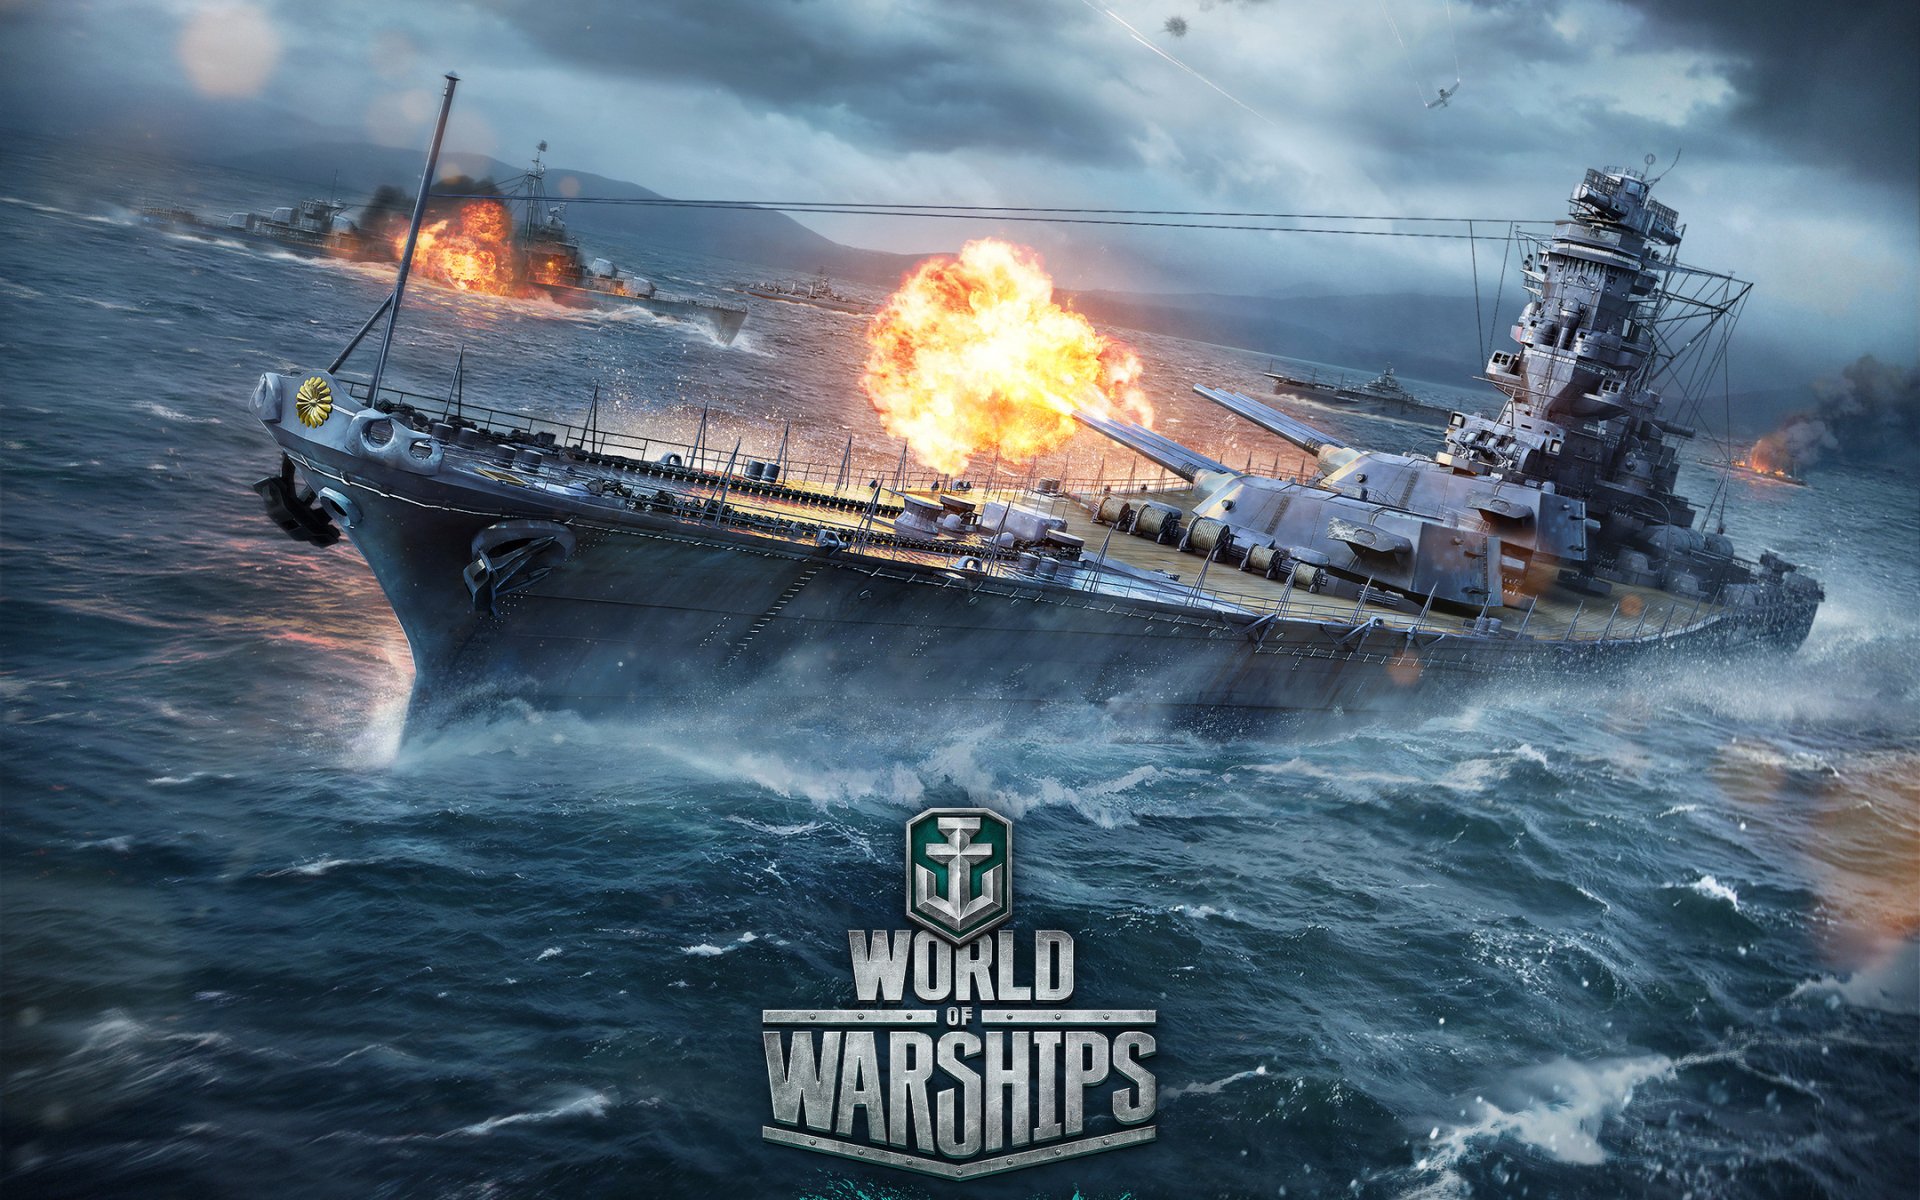 World of Warships WG battle ship poster WG Мир Кораблей WoWS Wargaming  Net World of Warships 1080P wallpap  Warship Battleship World of  warships wallpaper